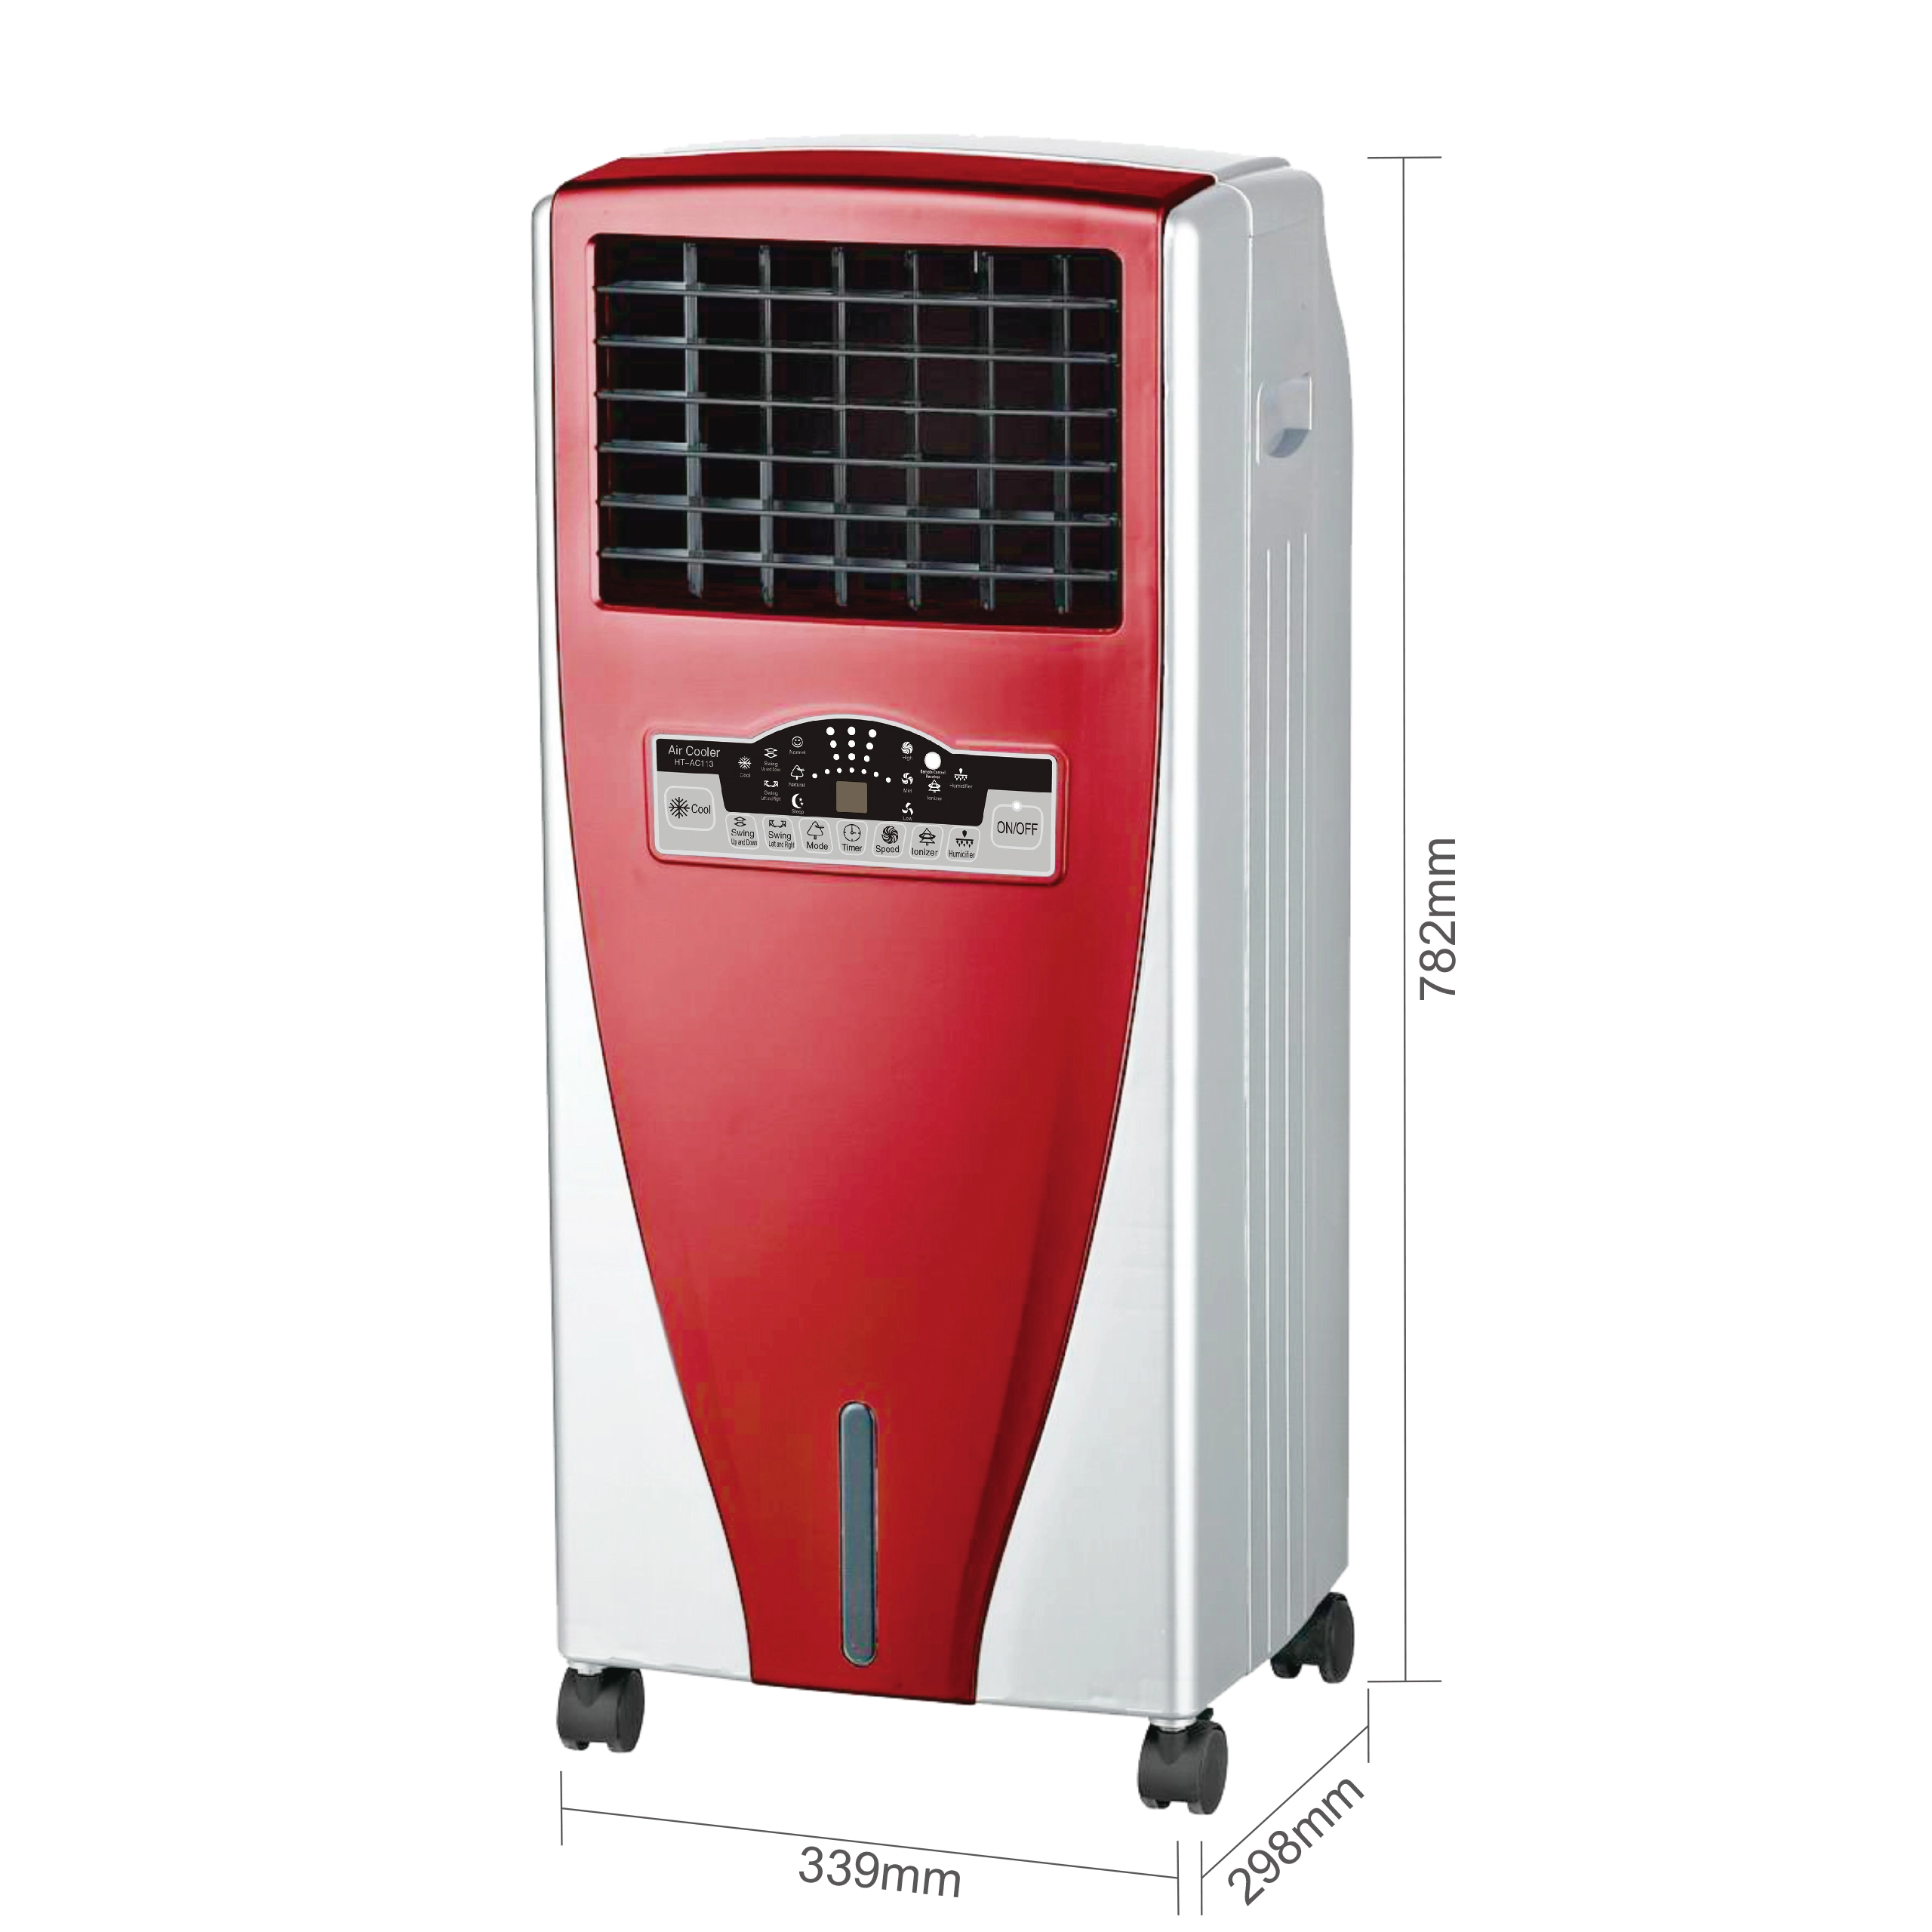  Enfriador de aire de evaporador para el hogar conveniente e innovador para interiores 40L